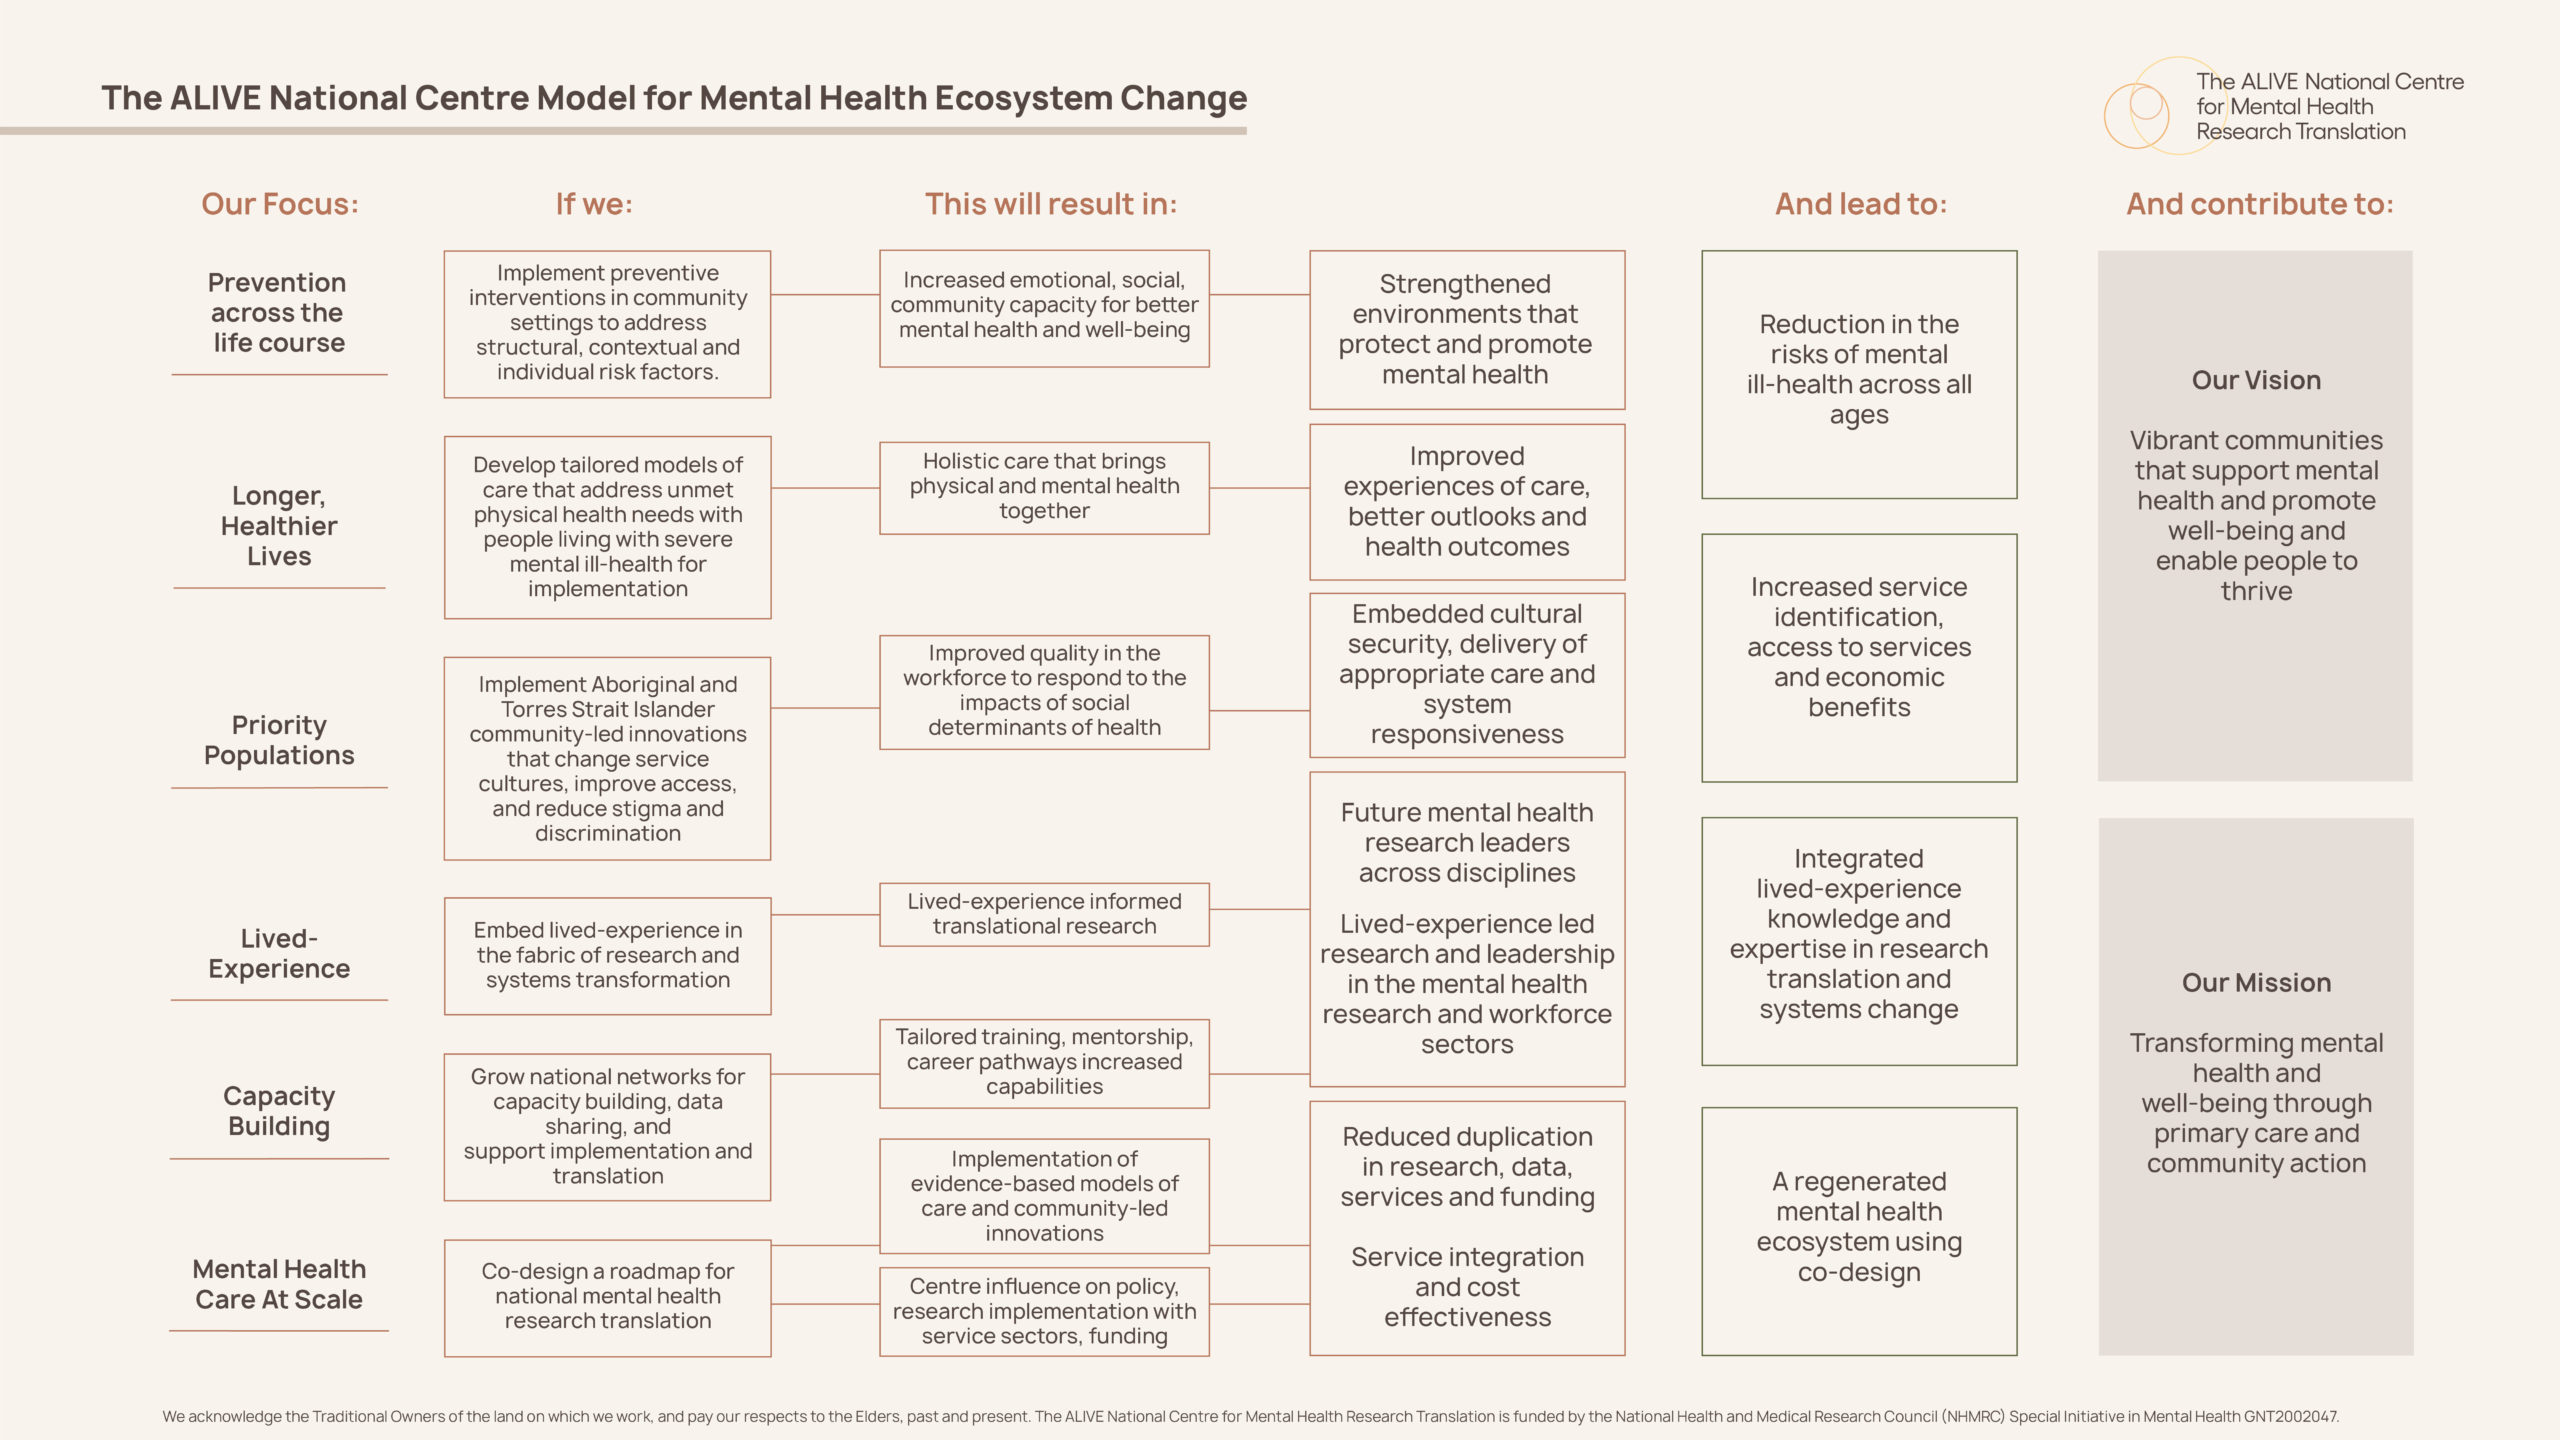 The ALIVE model for mental health ecosystem change